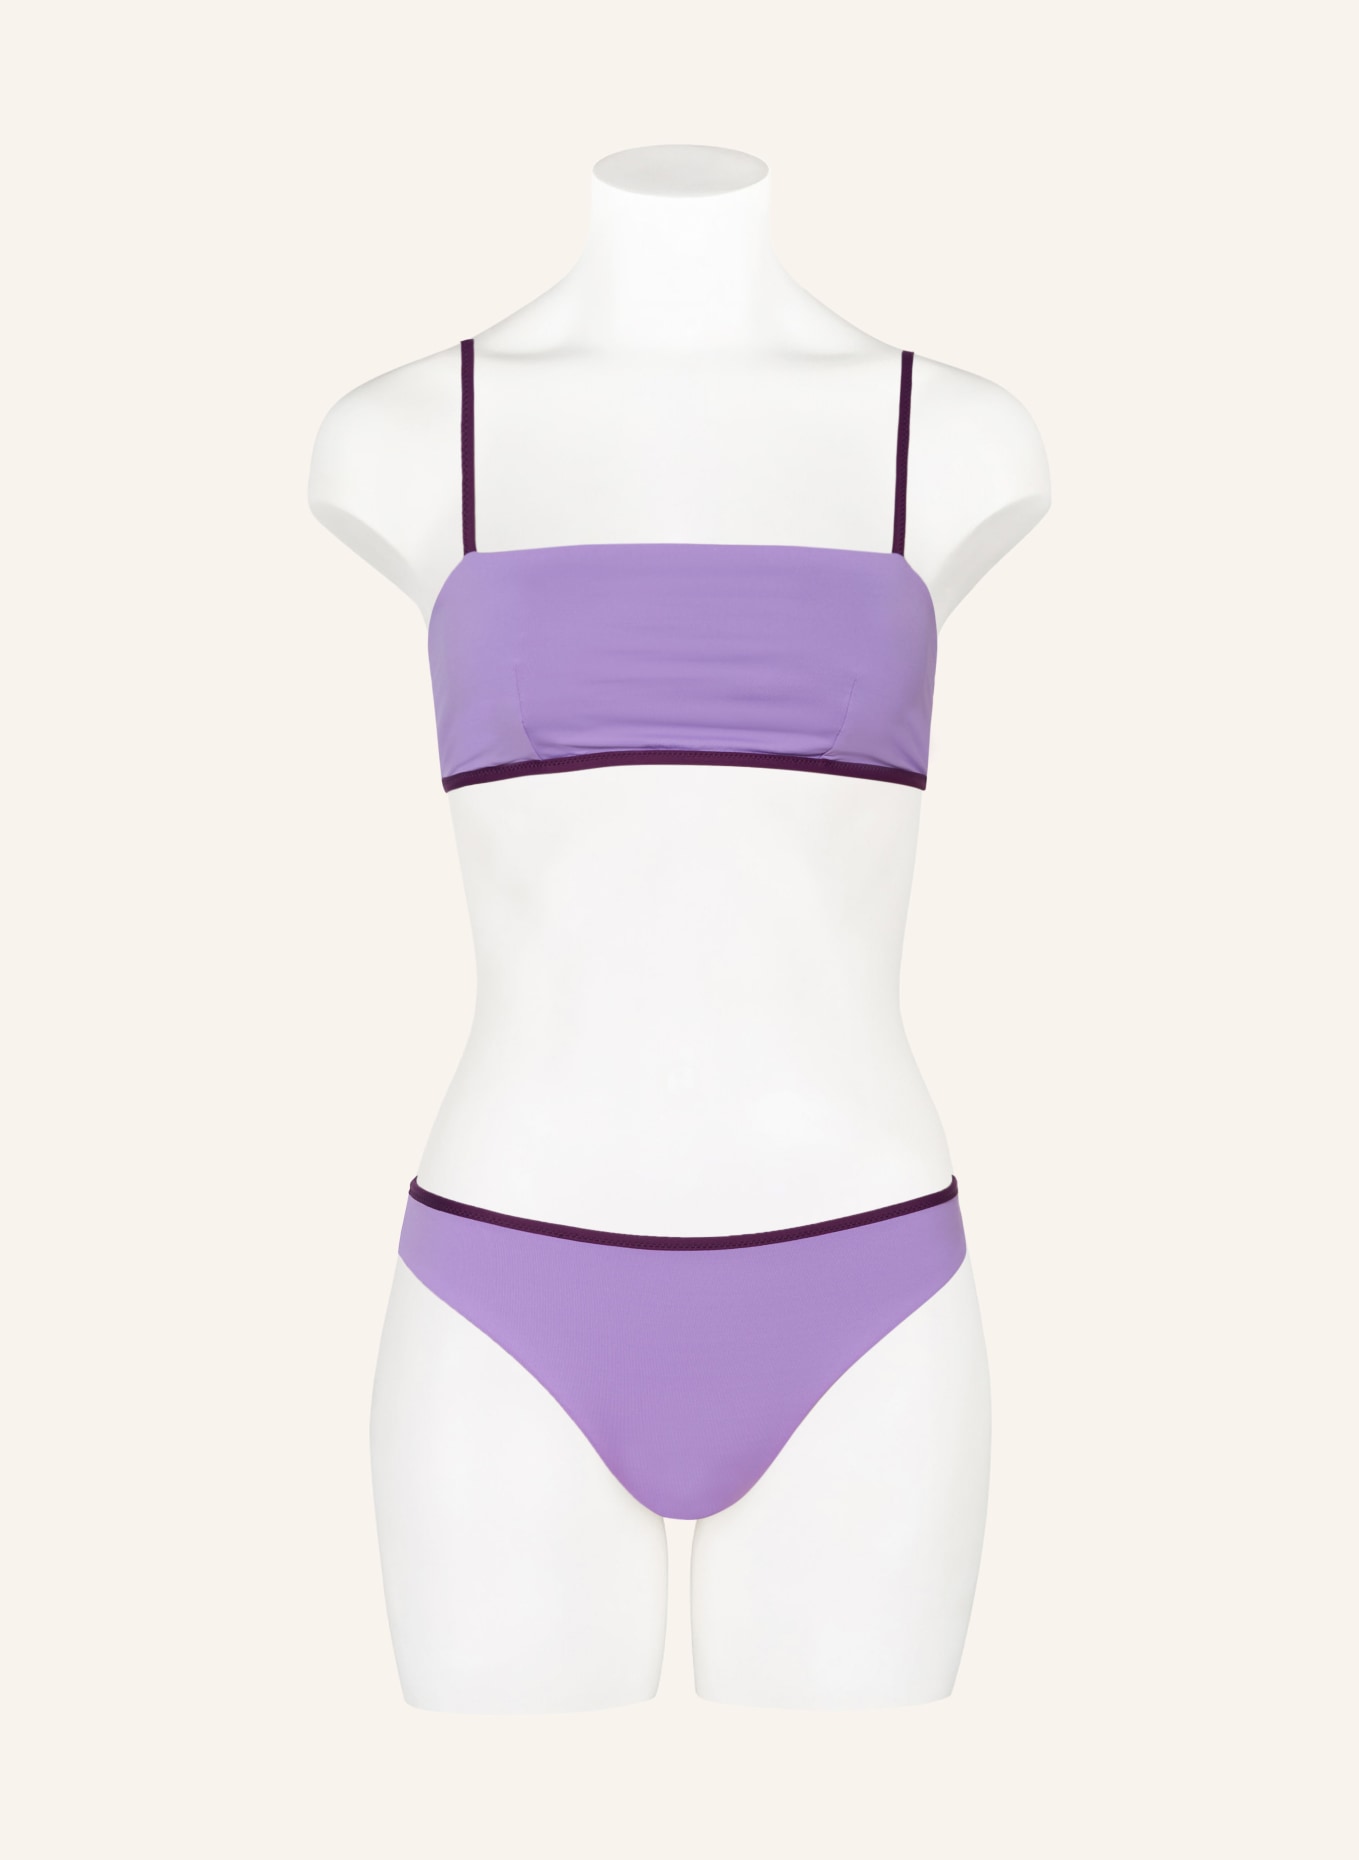 MYMARINI Bralette bikini top EASY TOP reversible, Color: DARK PURPLE/ LIGHT PURPLE (Image 4)